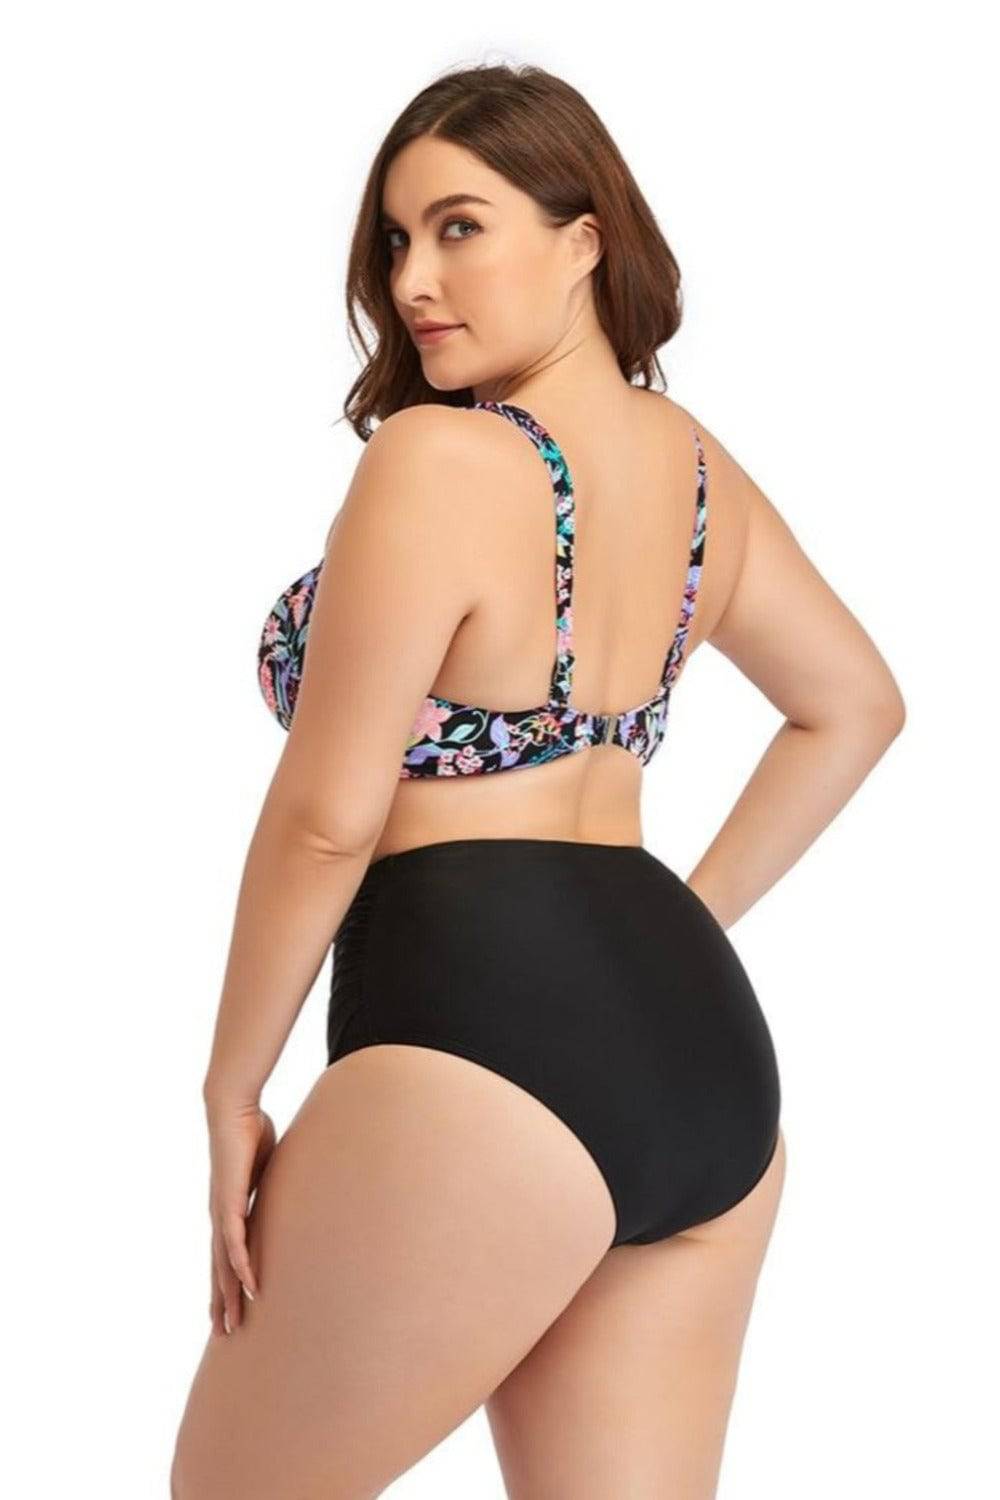 KBOPLEMQ Bikini large bust swimsuit, sexy, transparent, high waist